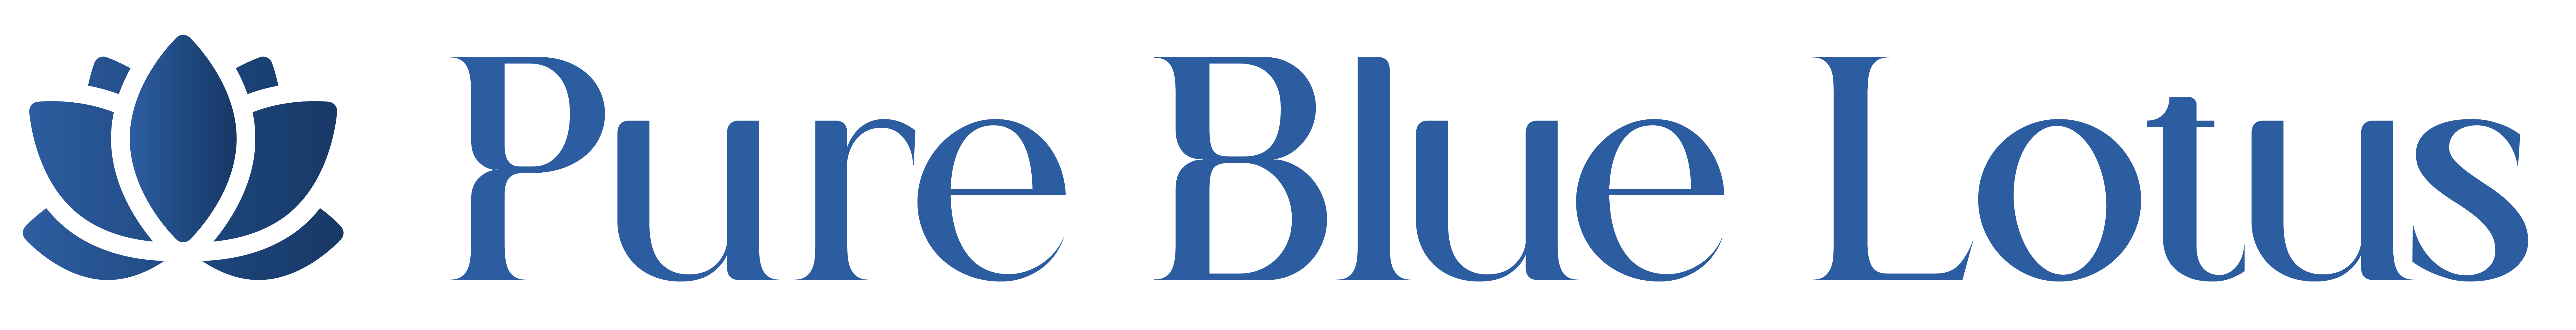 pure blue lotus oil logo 2